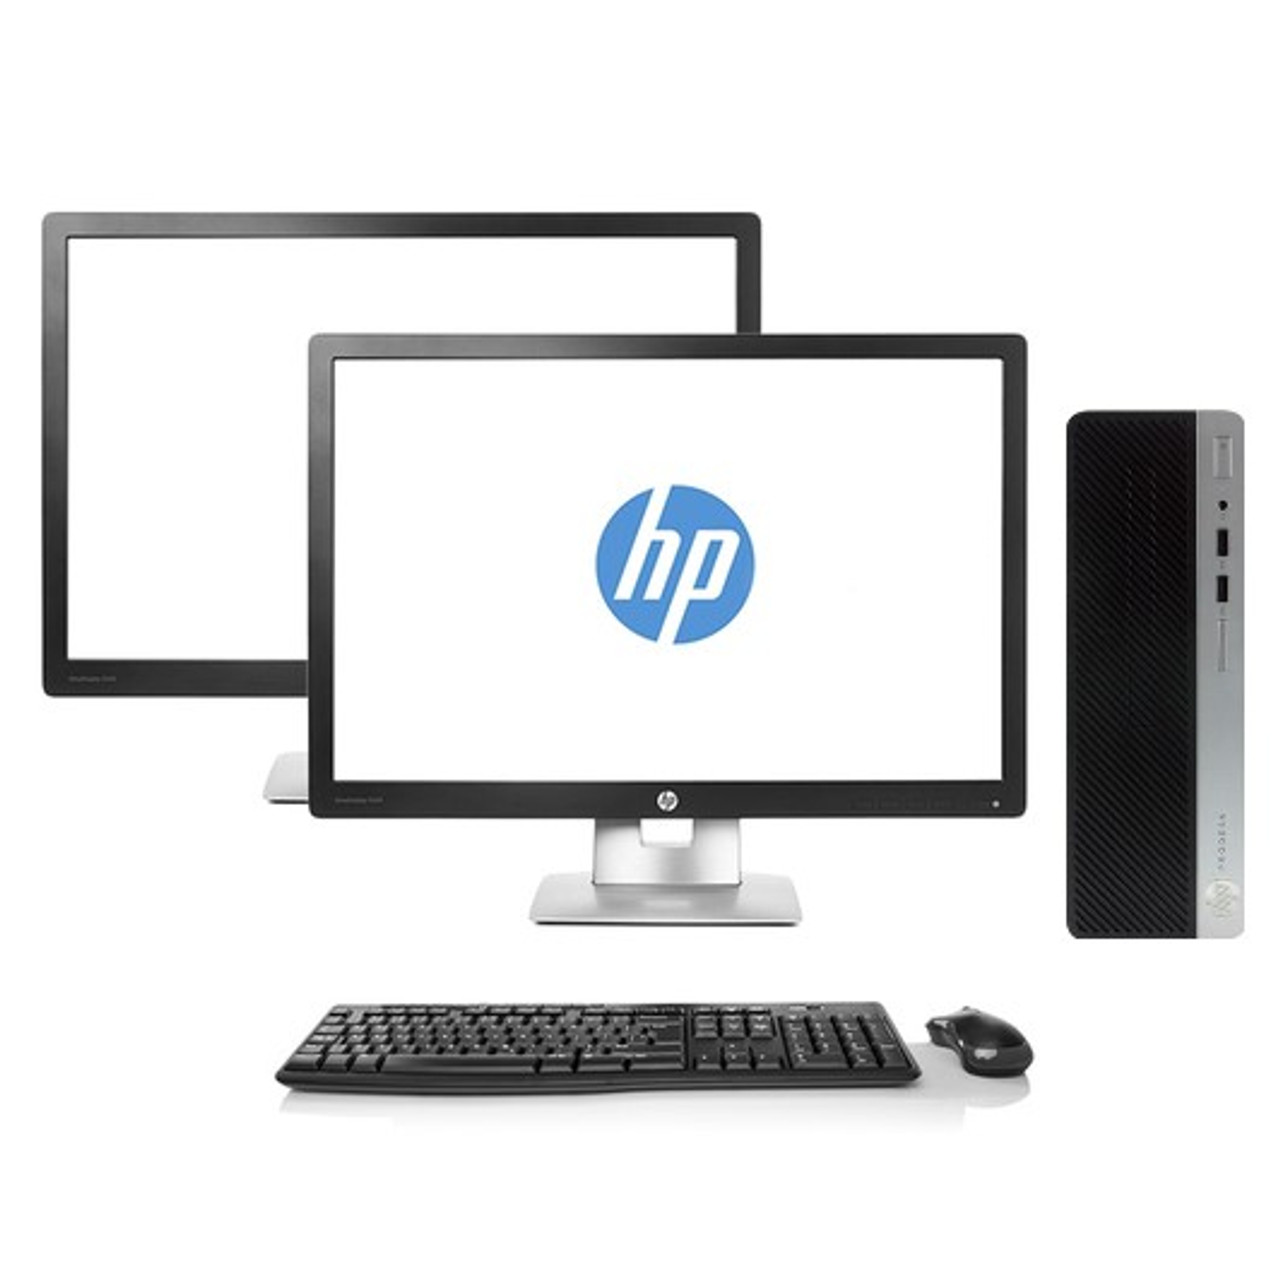 HP Dual Monitor 7th Gen Desktop Full Setup - Intel Core i5 16GB RAM 1TB HDD  Windows 10 - 22